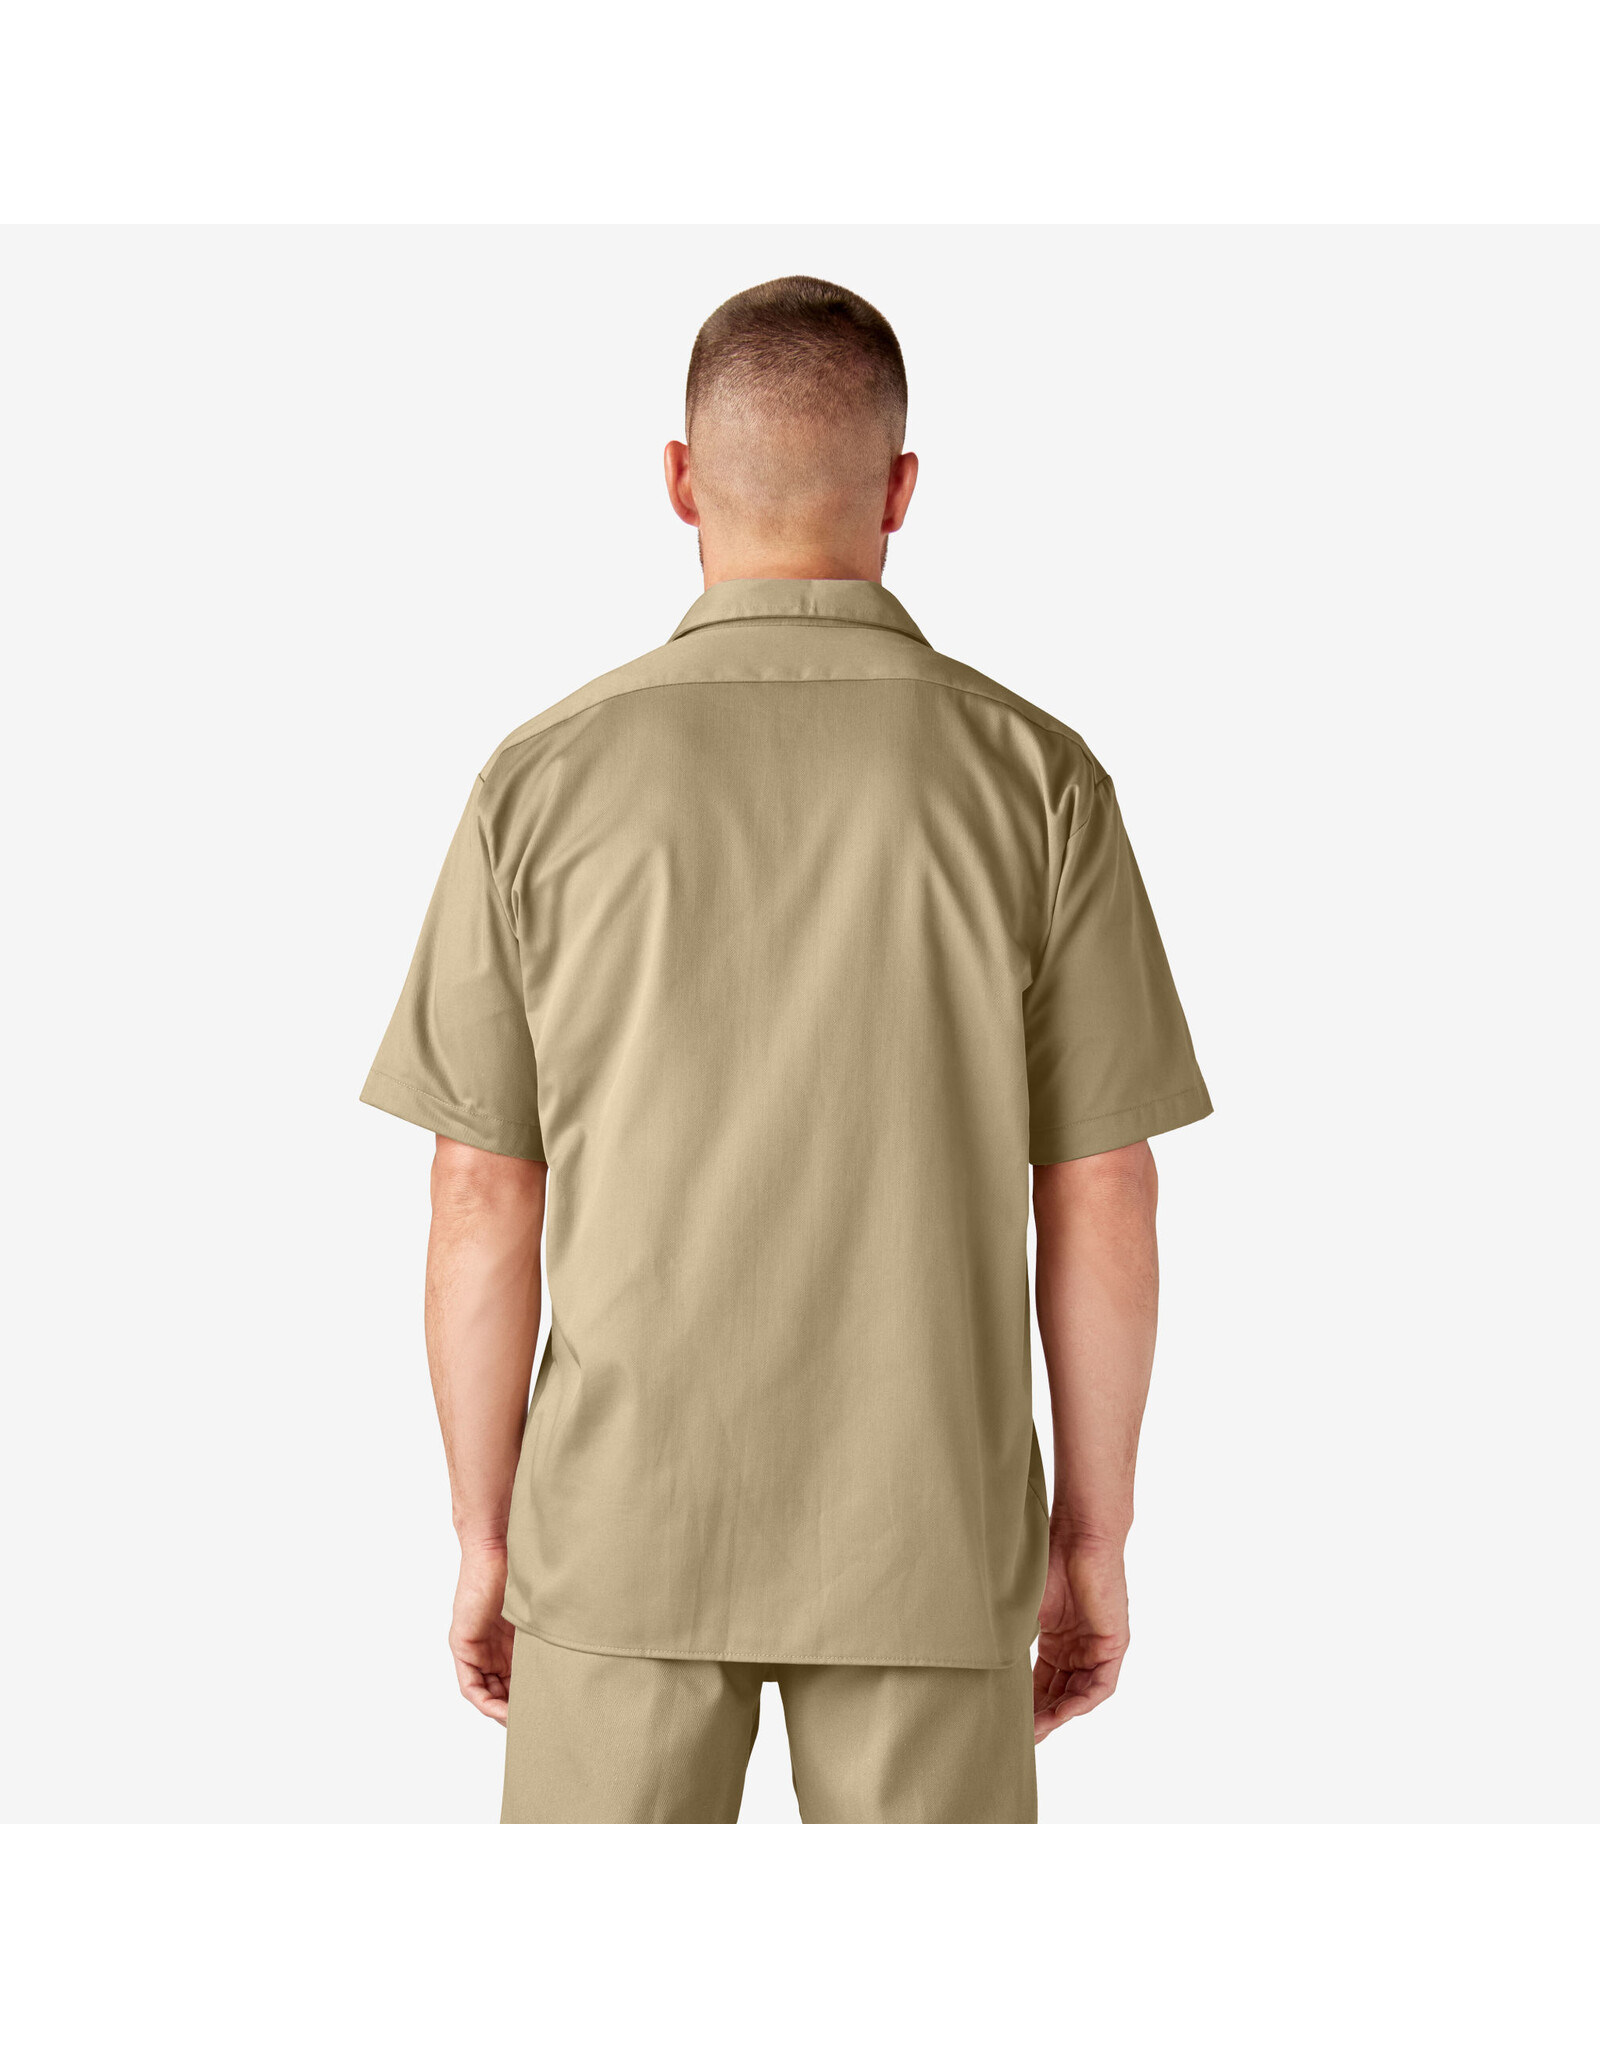 DICKIES Short Sleeve Work Shirt Khaki Original Fit - 1574KH